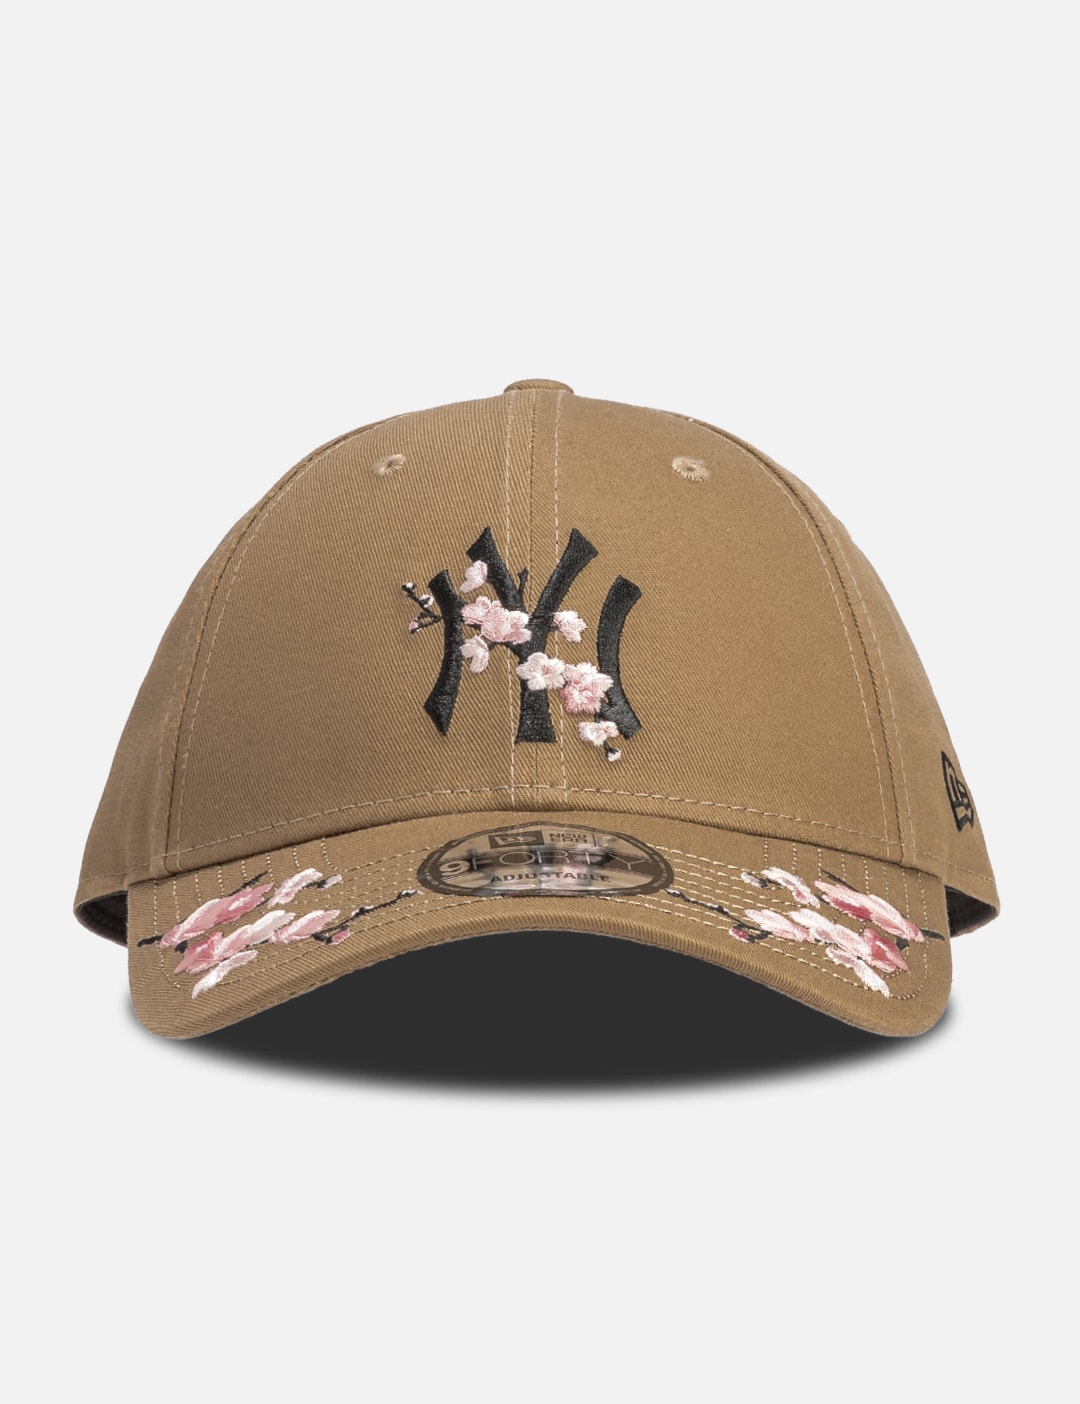 Lv Supreme Fashion Outdoor Sports Caps Unisex Cotton Snapback Hats